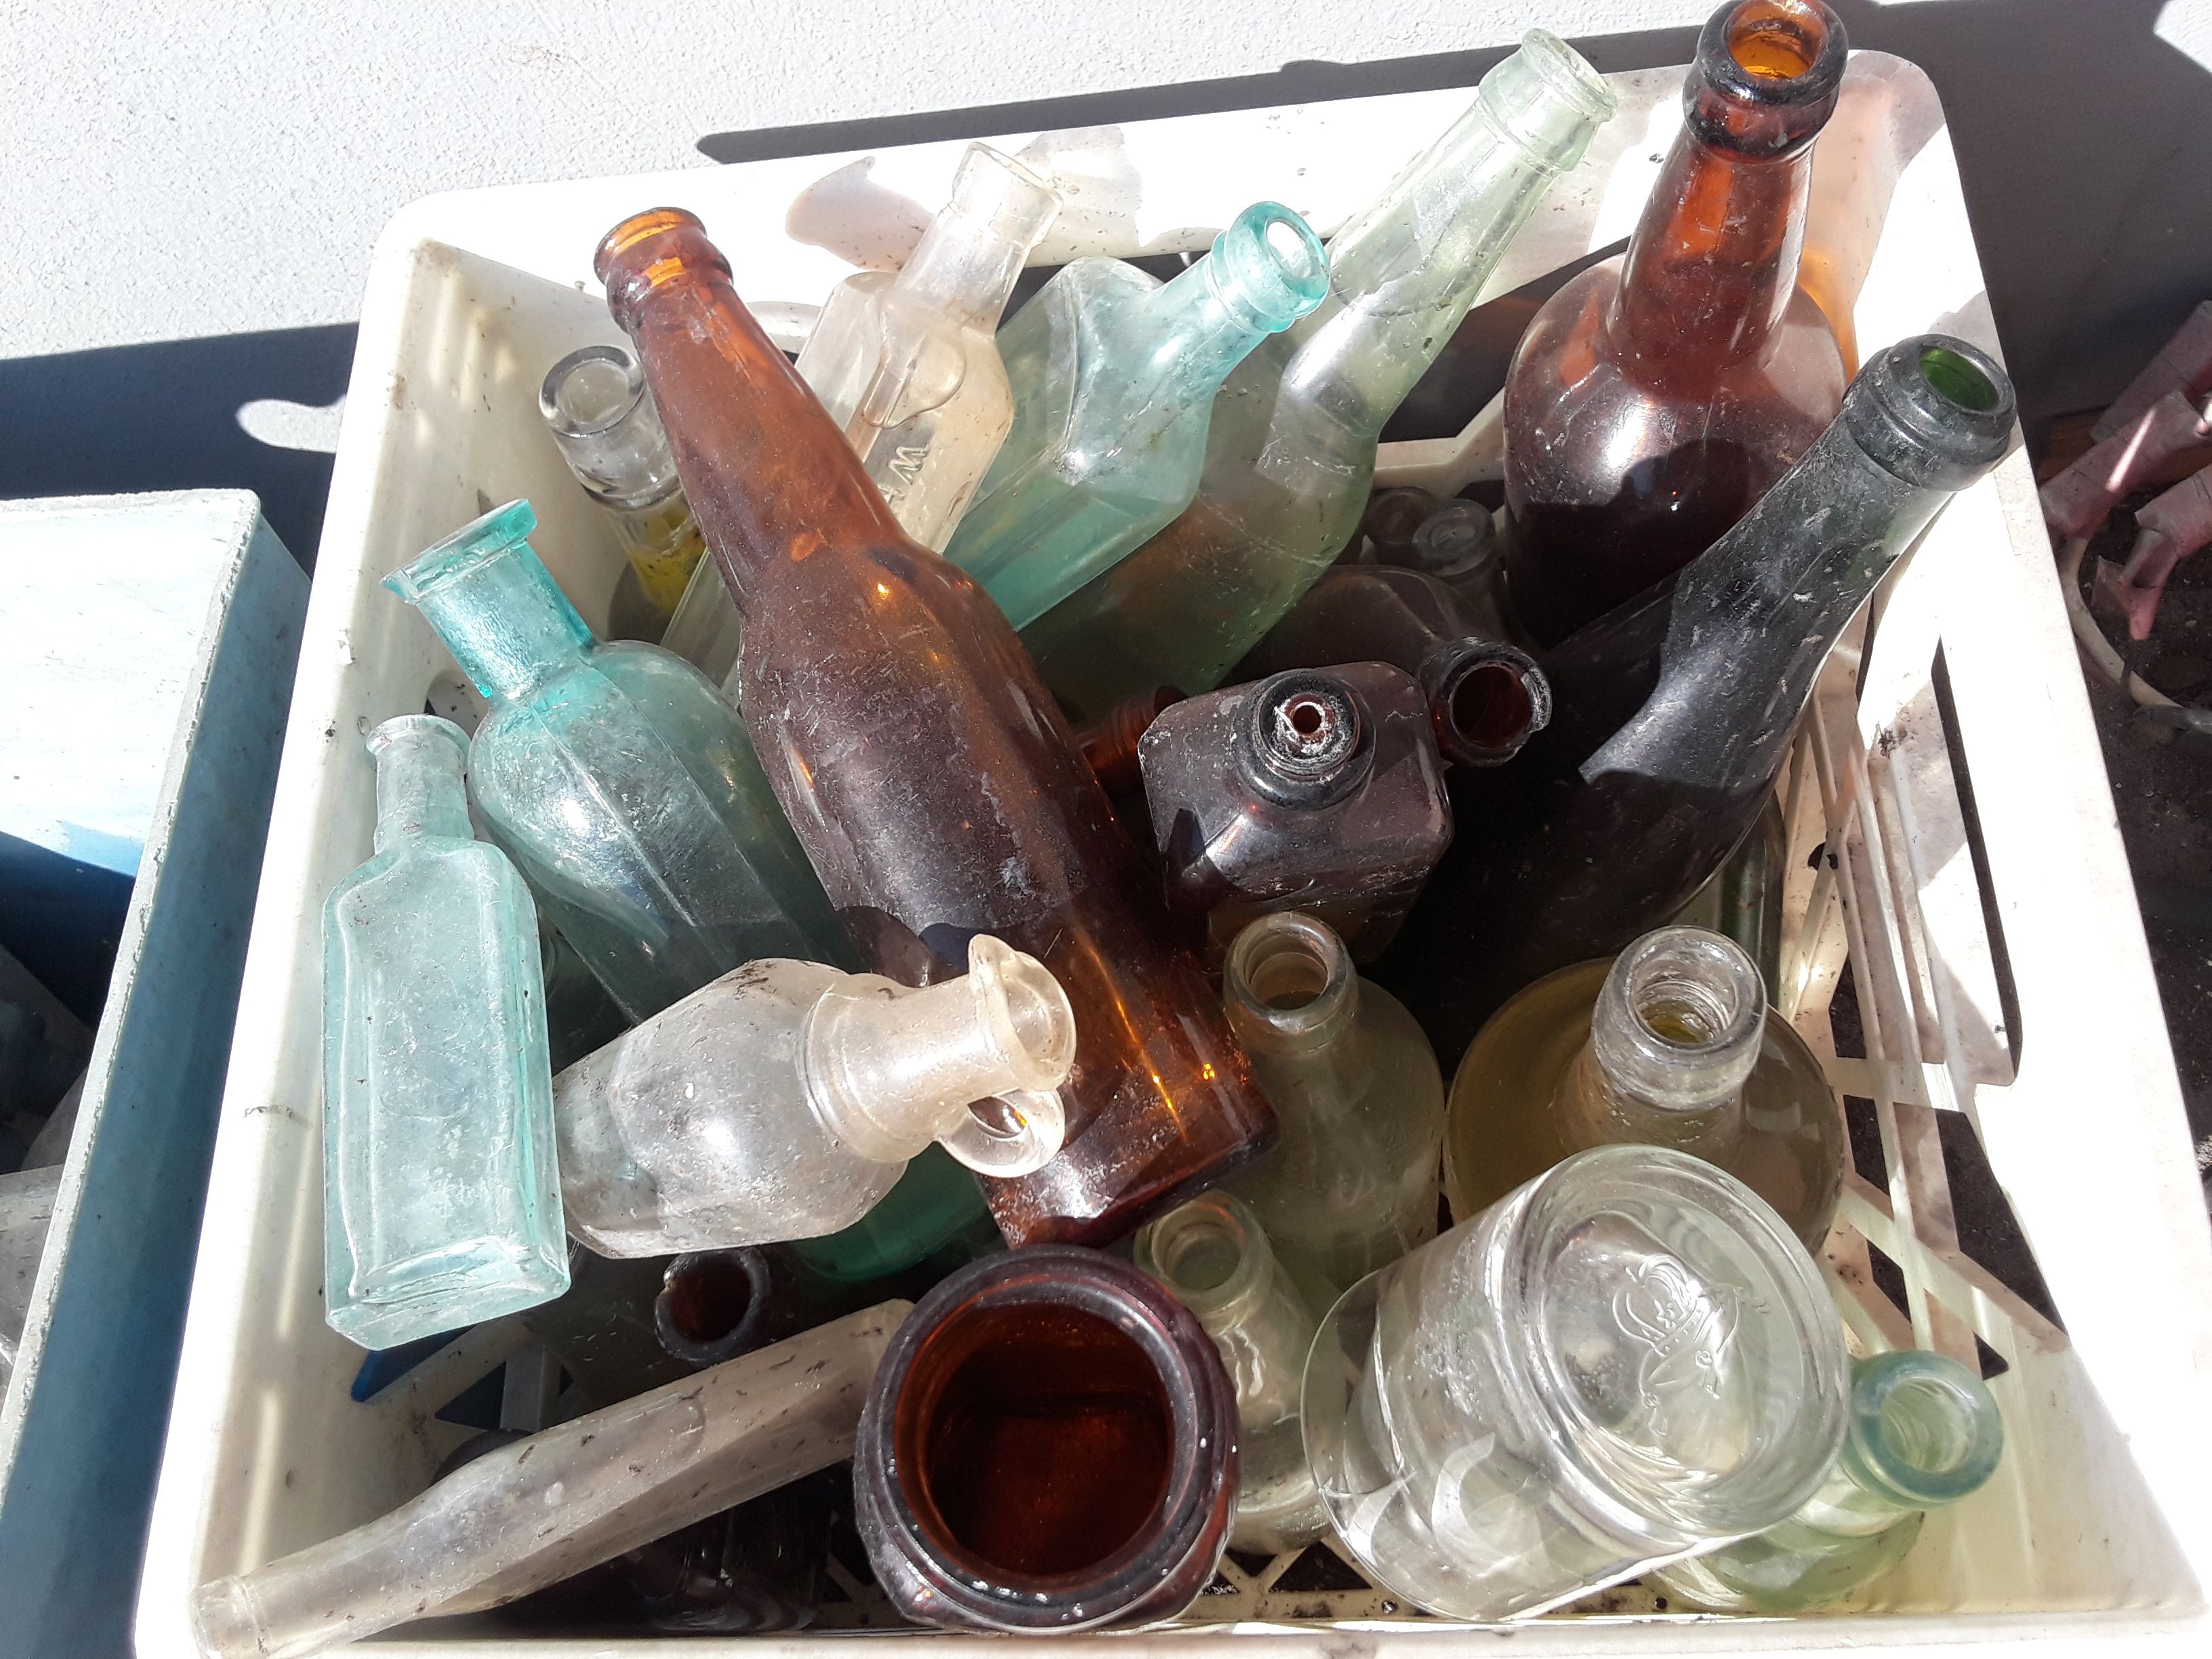 Pre-1900 glass antique bottles, mason jars, medicine bottles, etc.